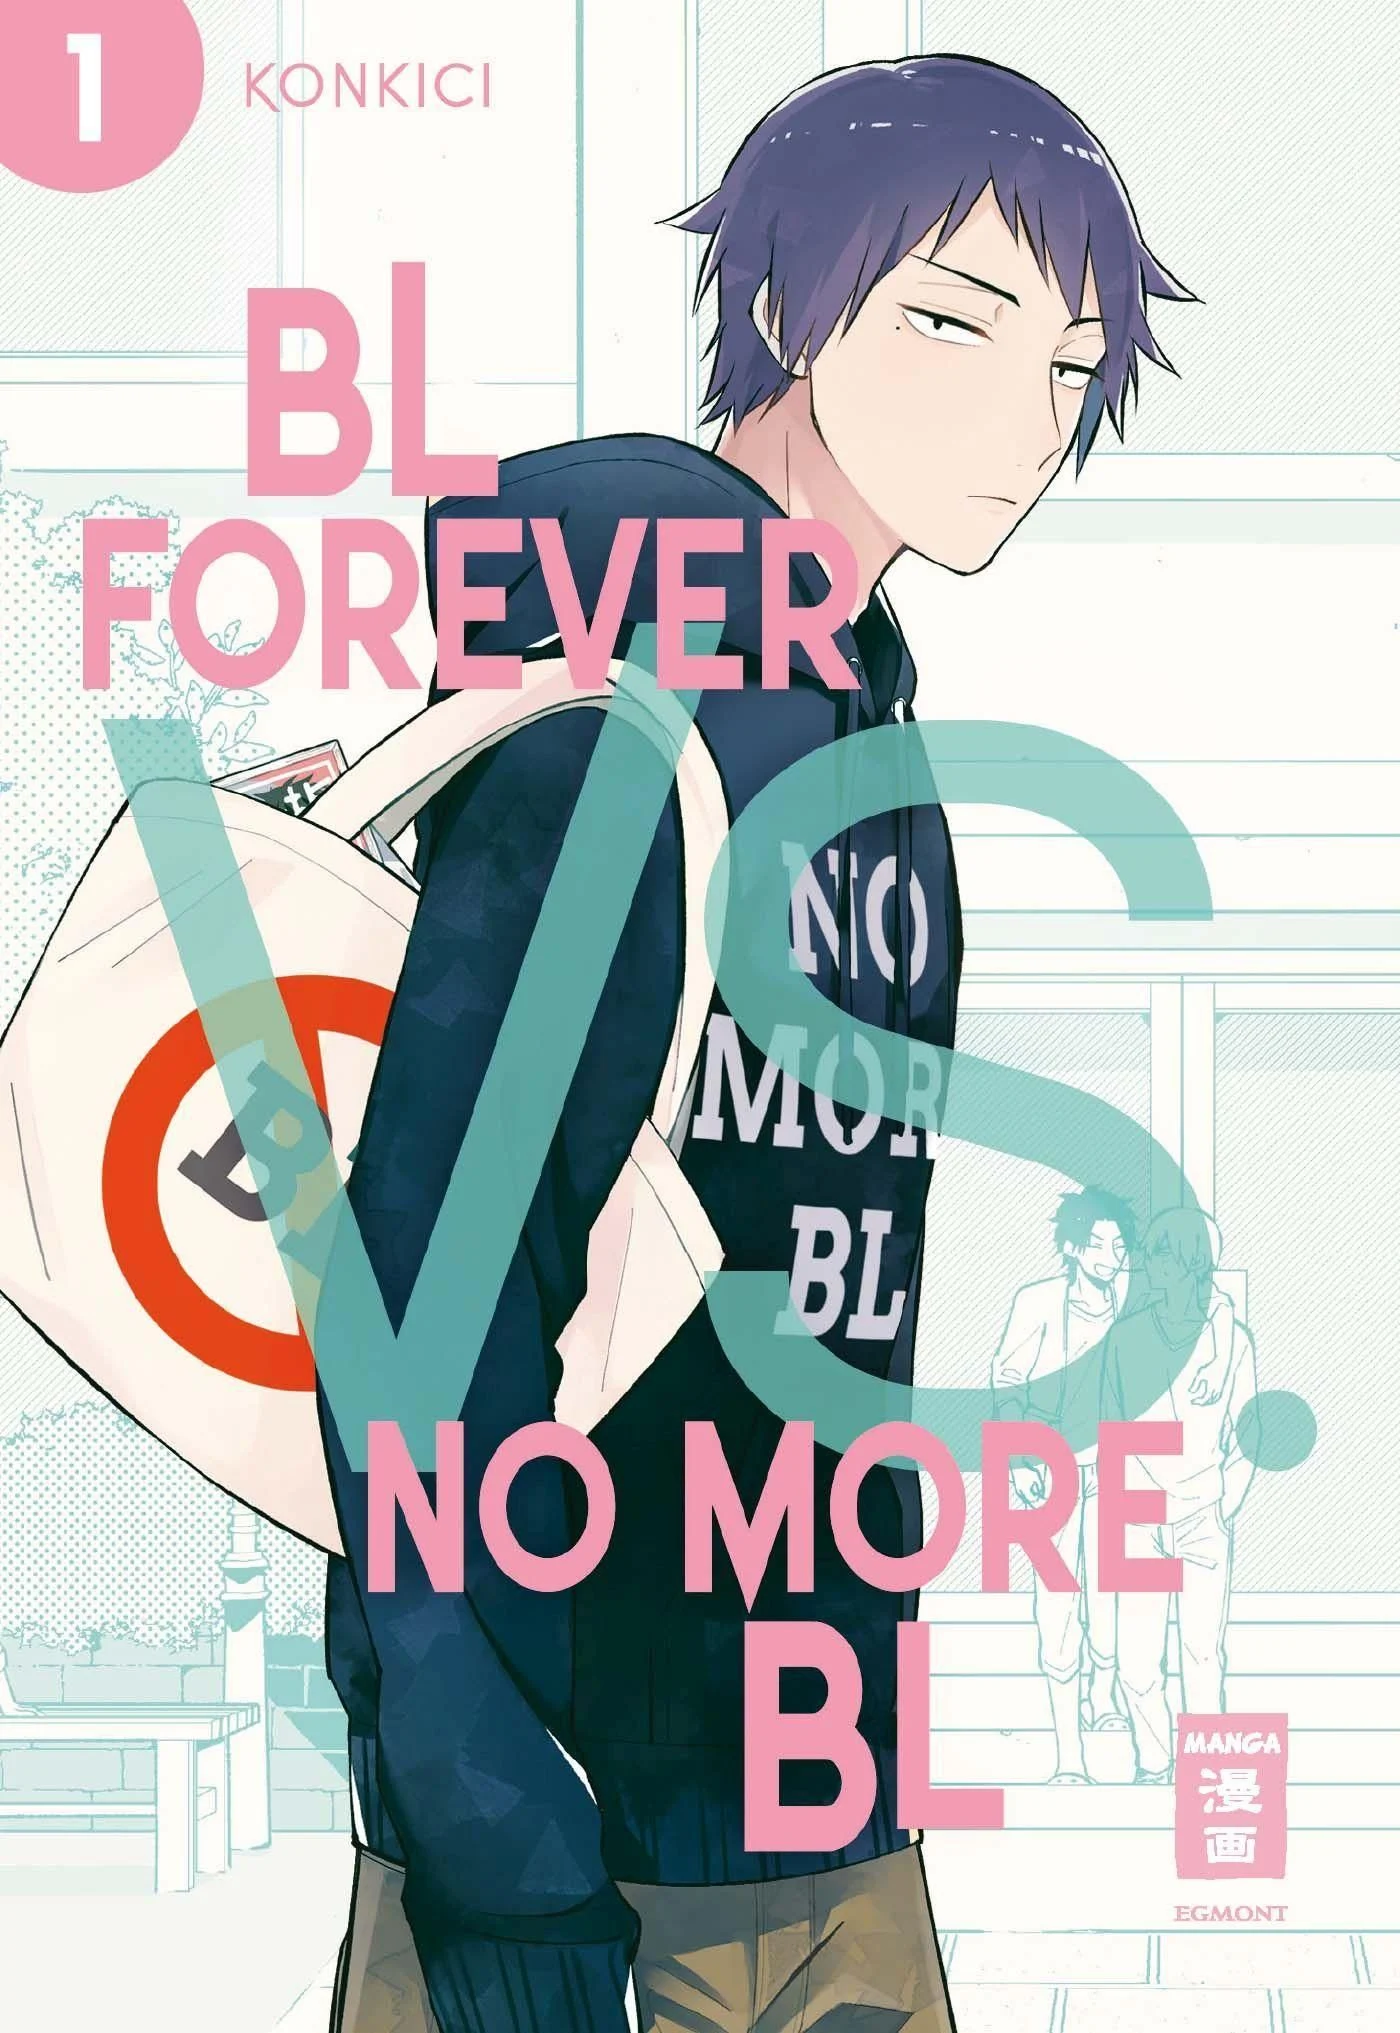 BL Forever vs. No More BL